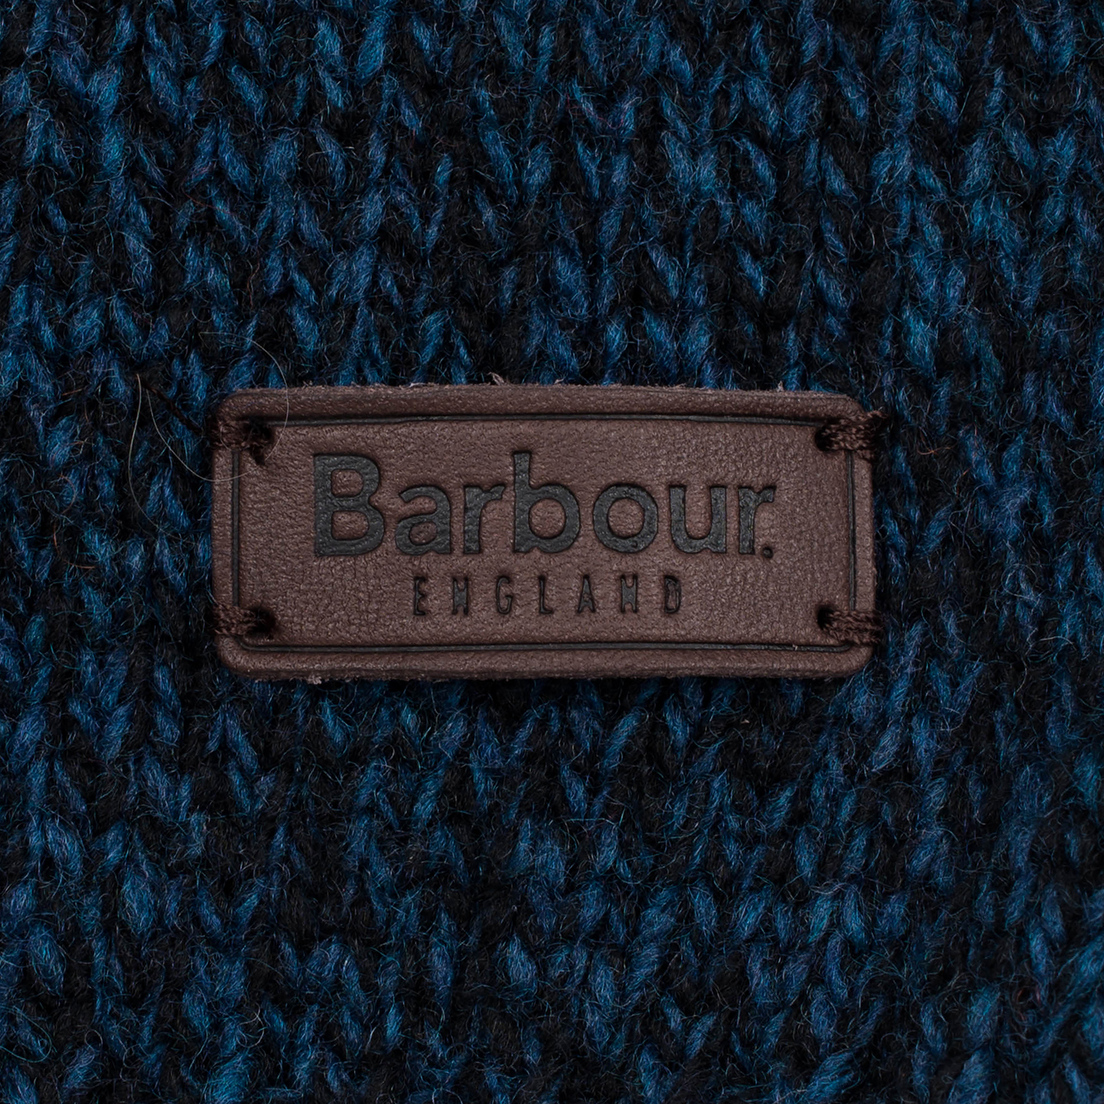 Barbour Мужской свитер Essential Chunky Half Button